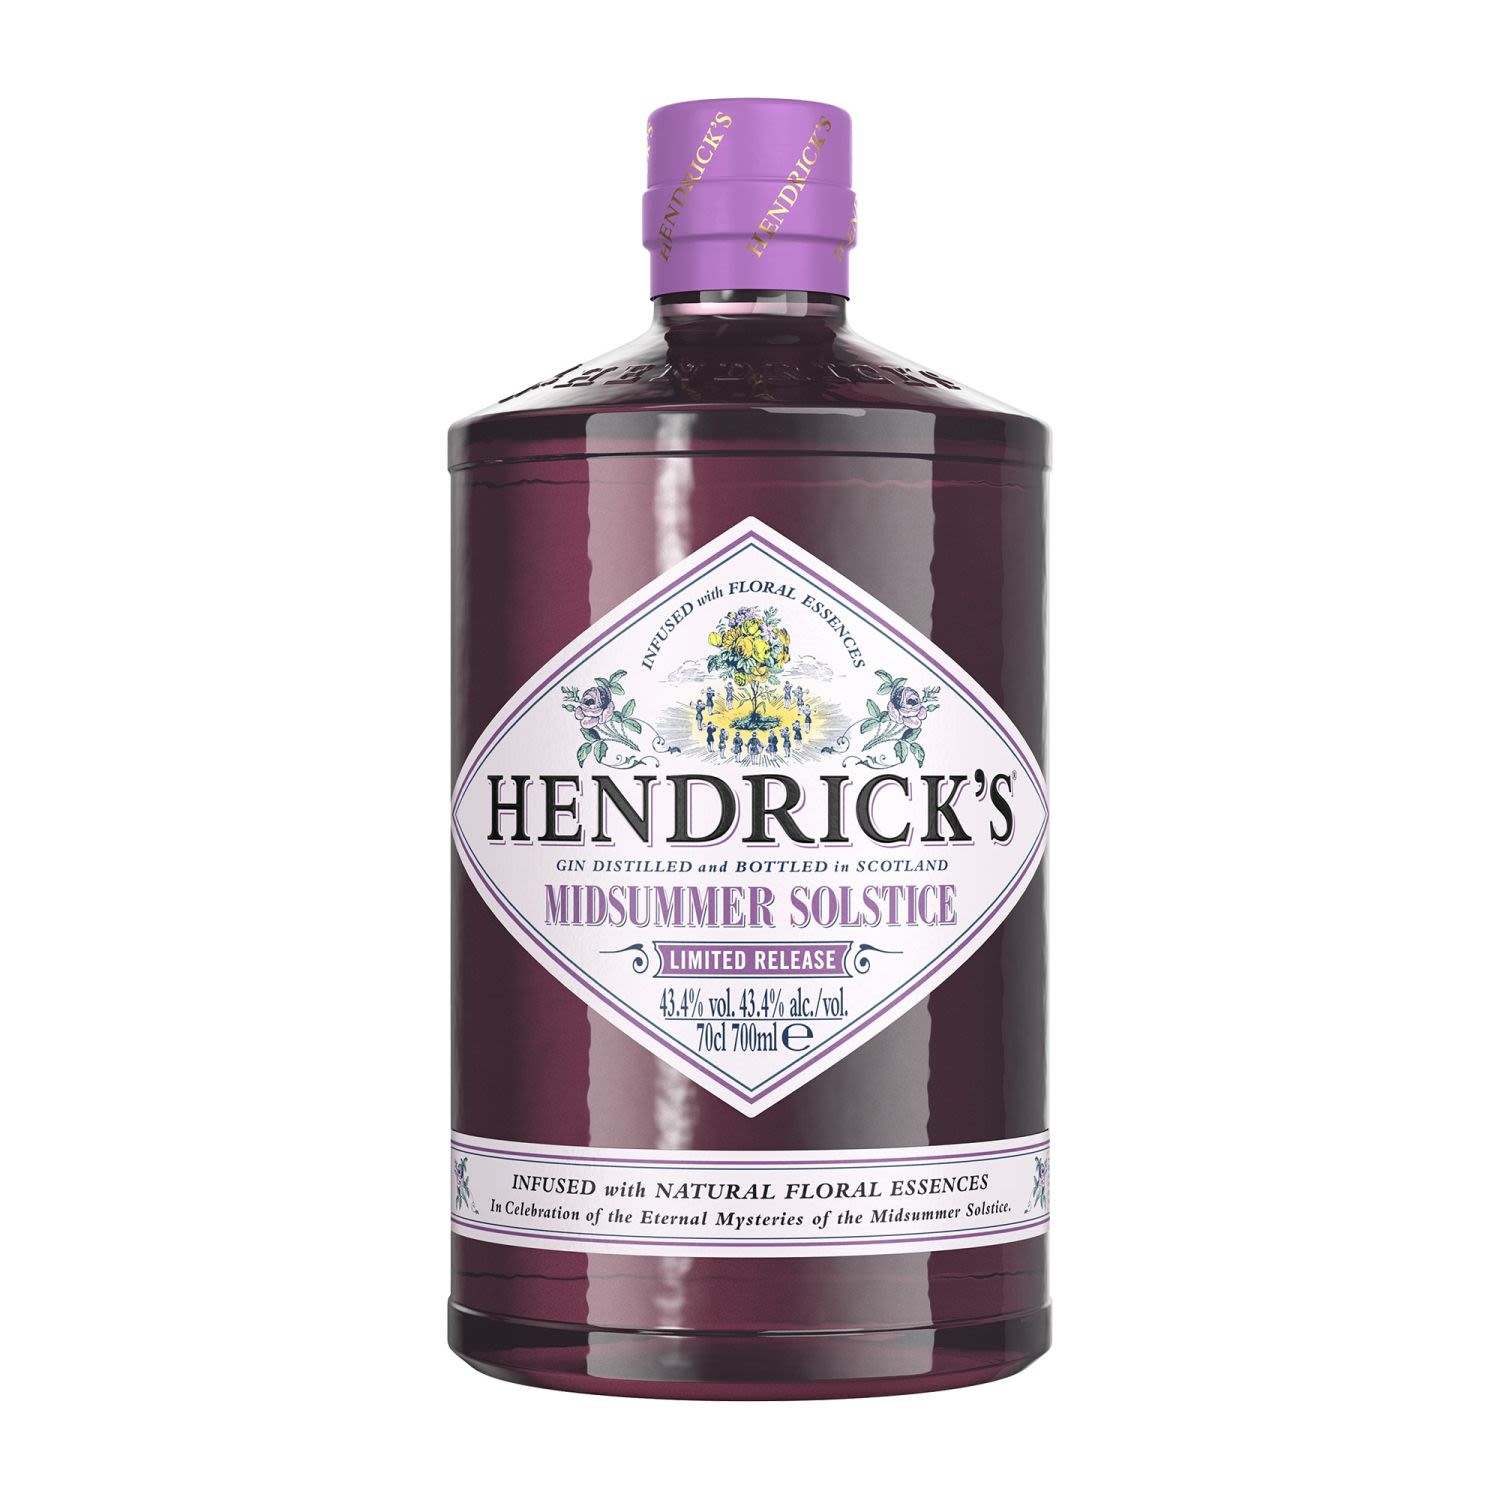 Hendrick's Midsummer Solstice Gin 700mL Bottle